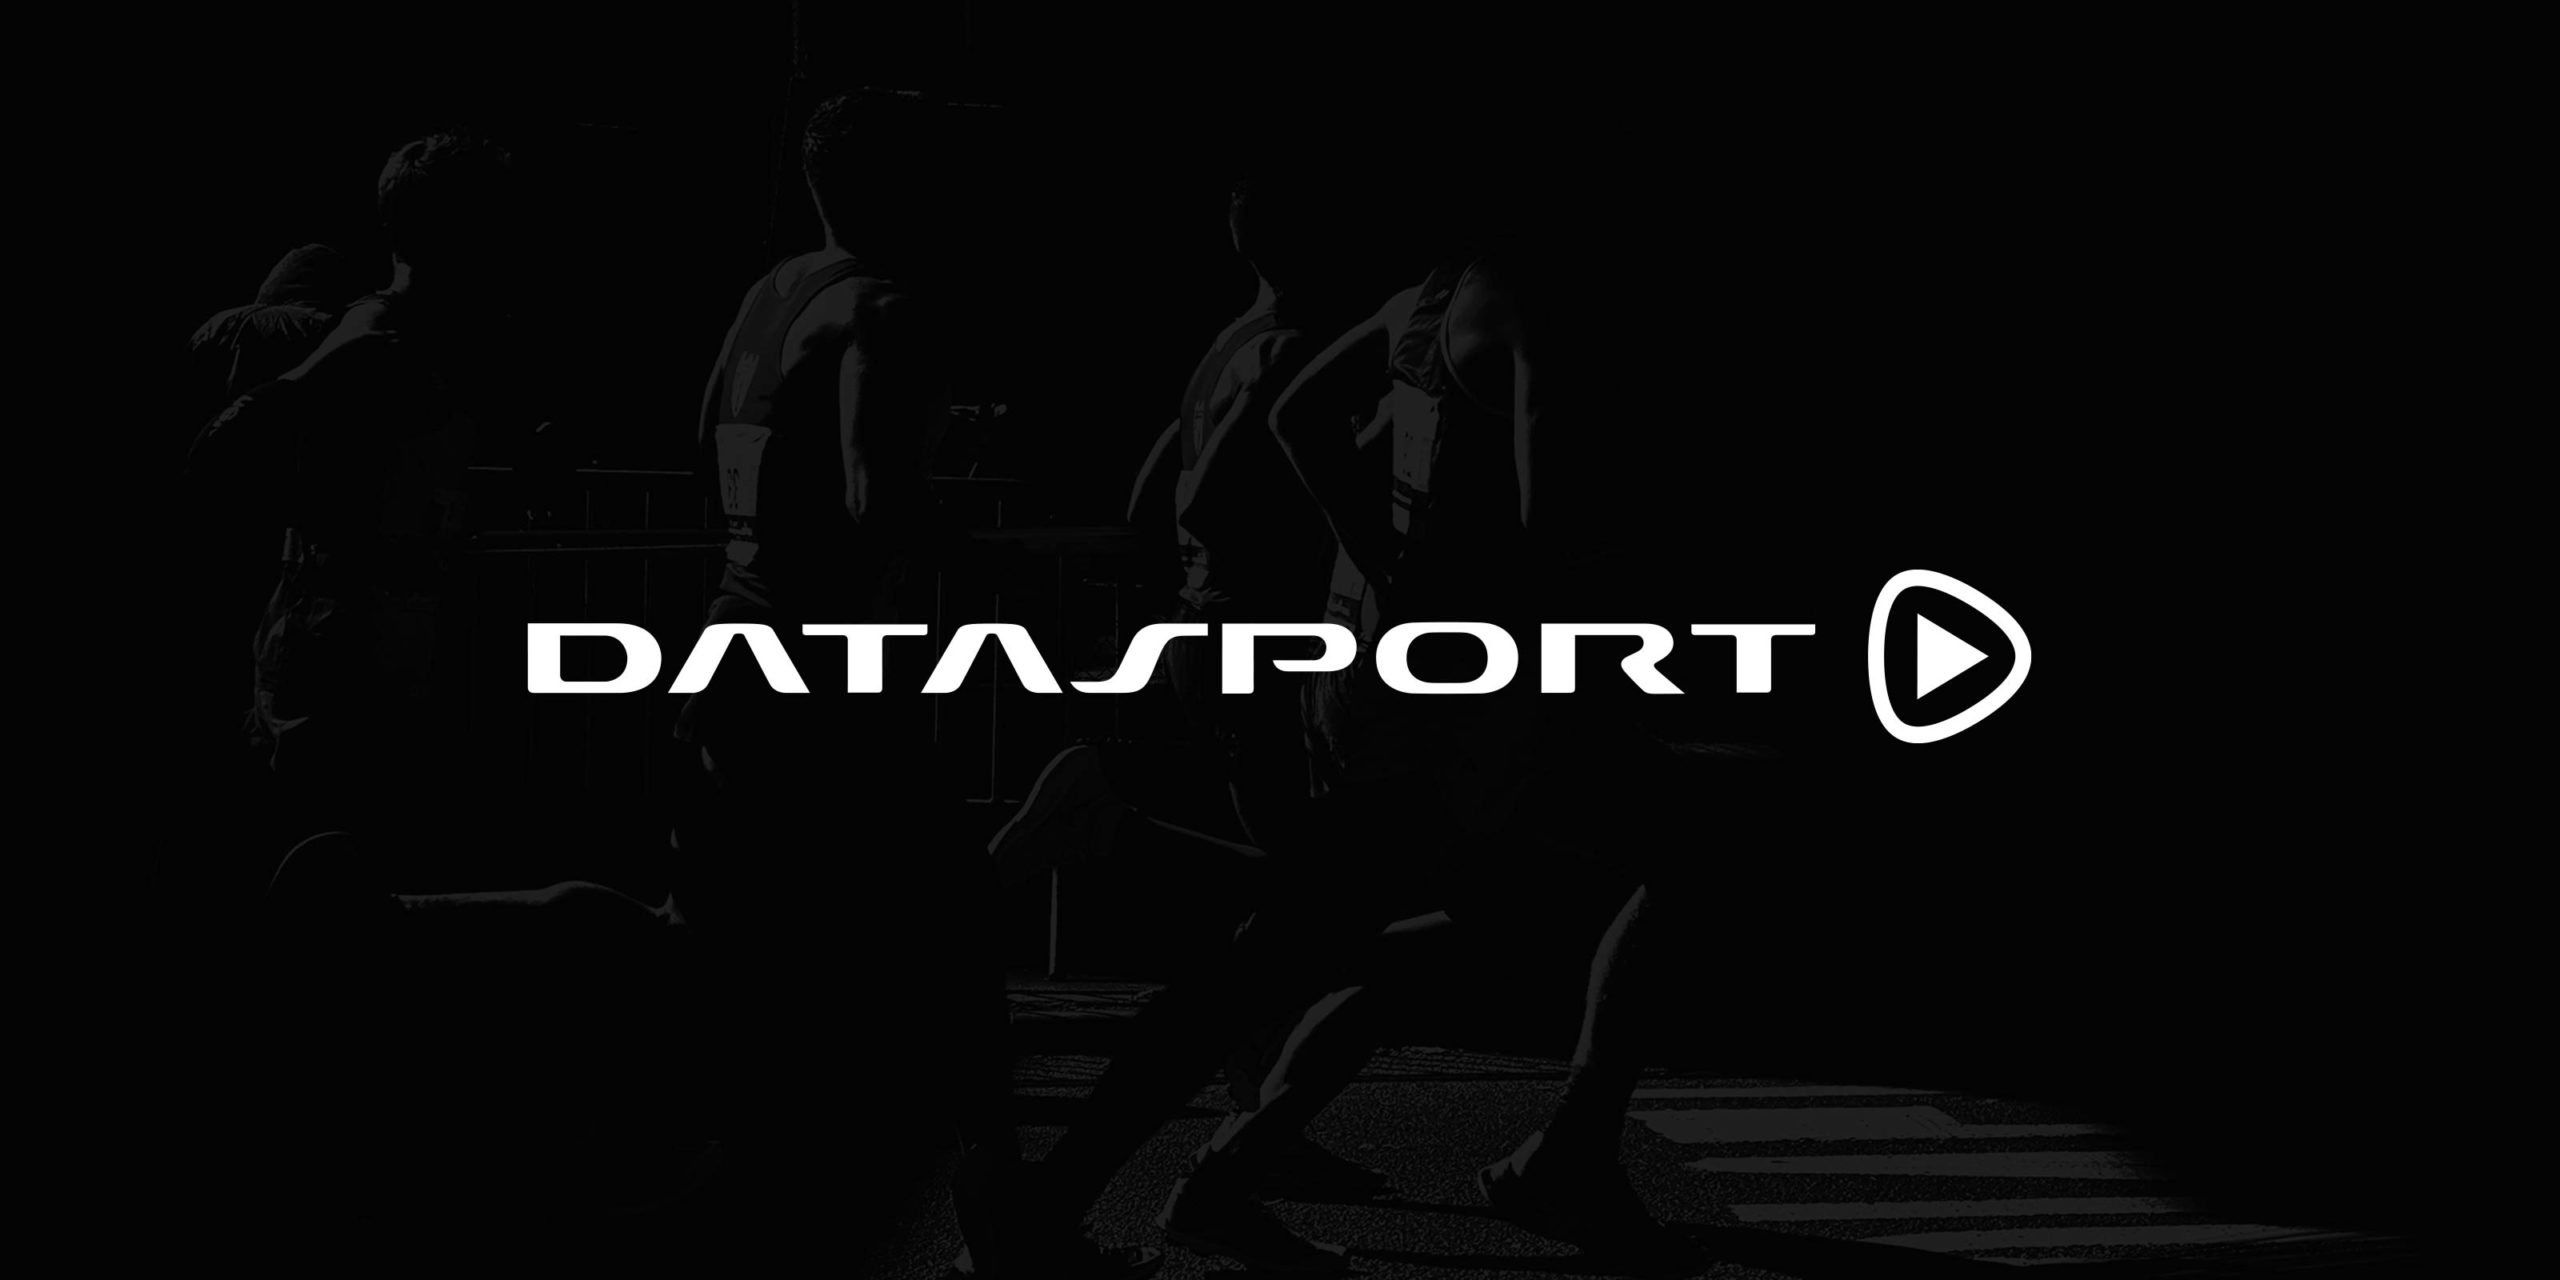 jal_pf_datasport_logo_1_2400x1600